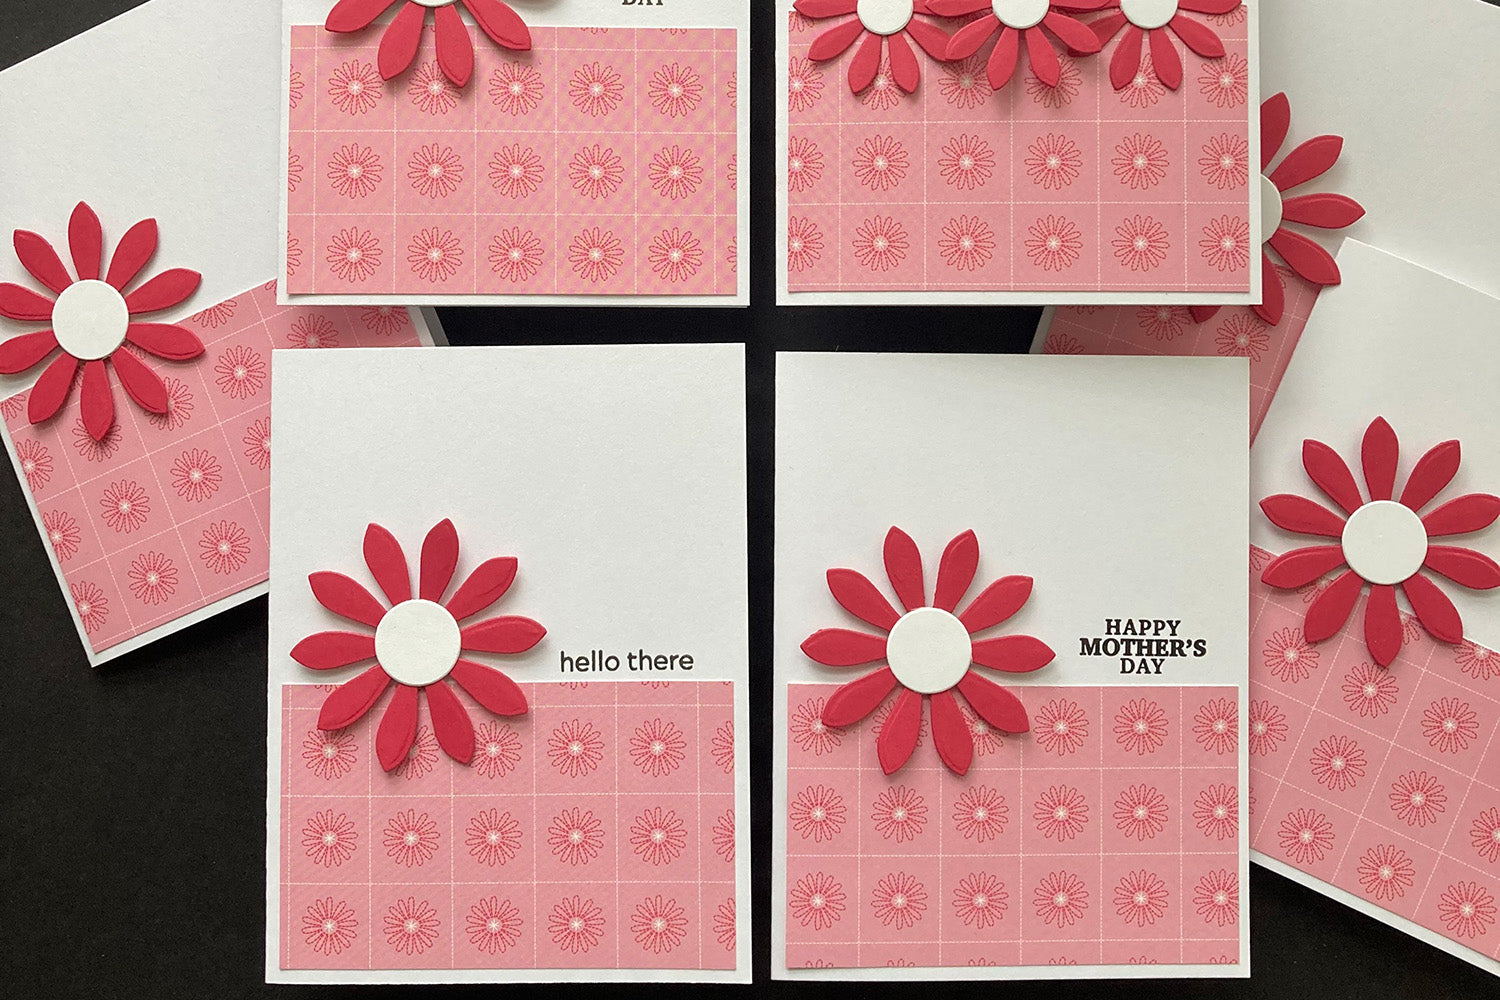 handmade greeting cards designs ideas